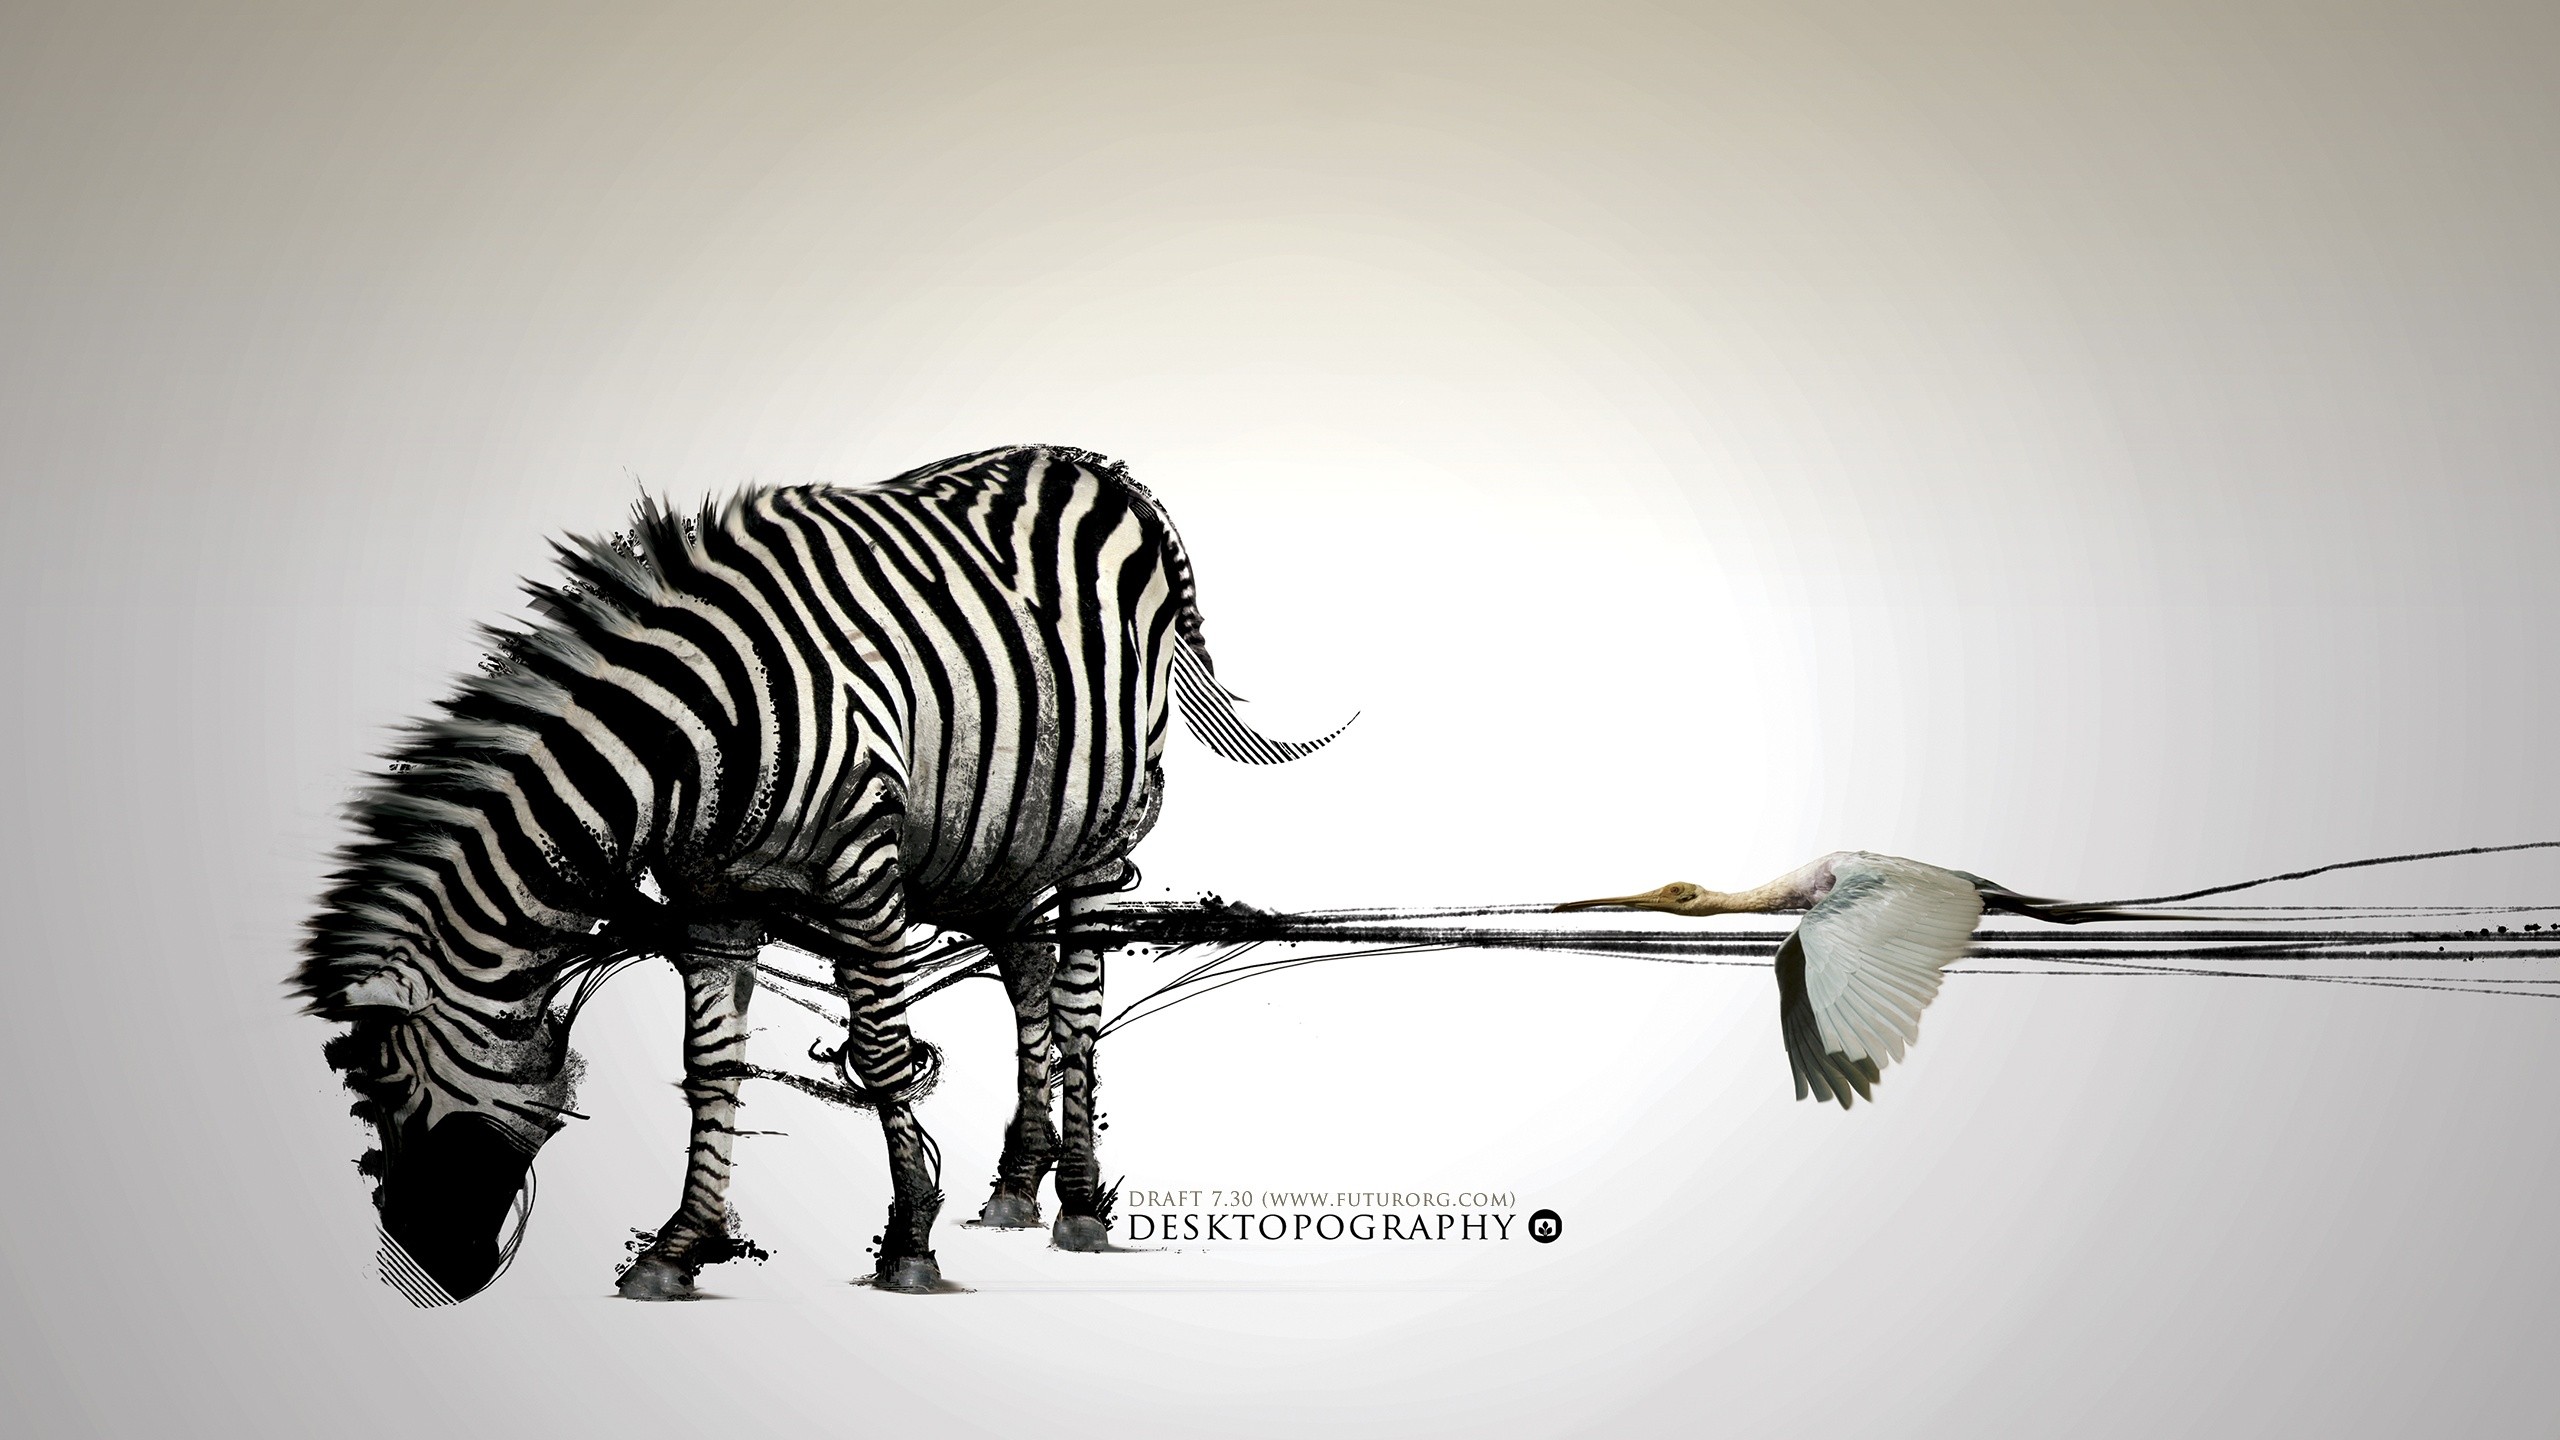 Desktopography, Zebras, Digital Art Wallpaper